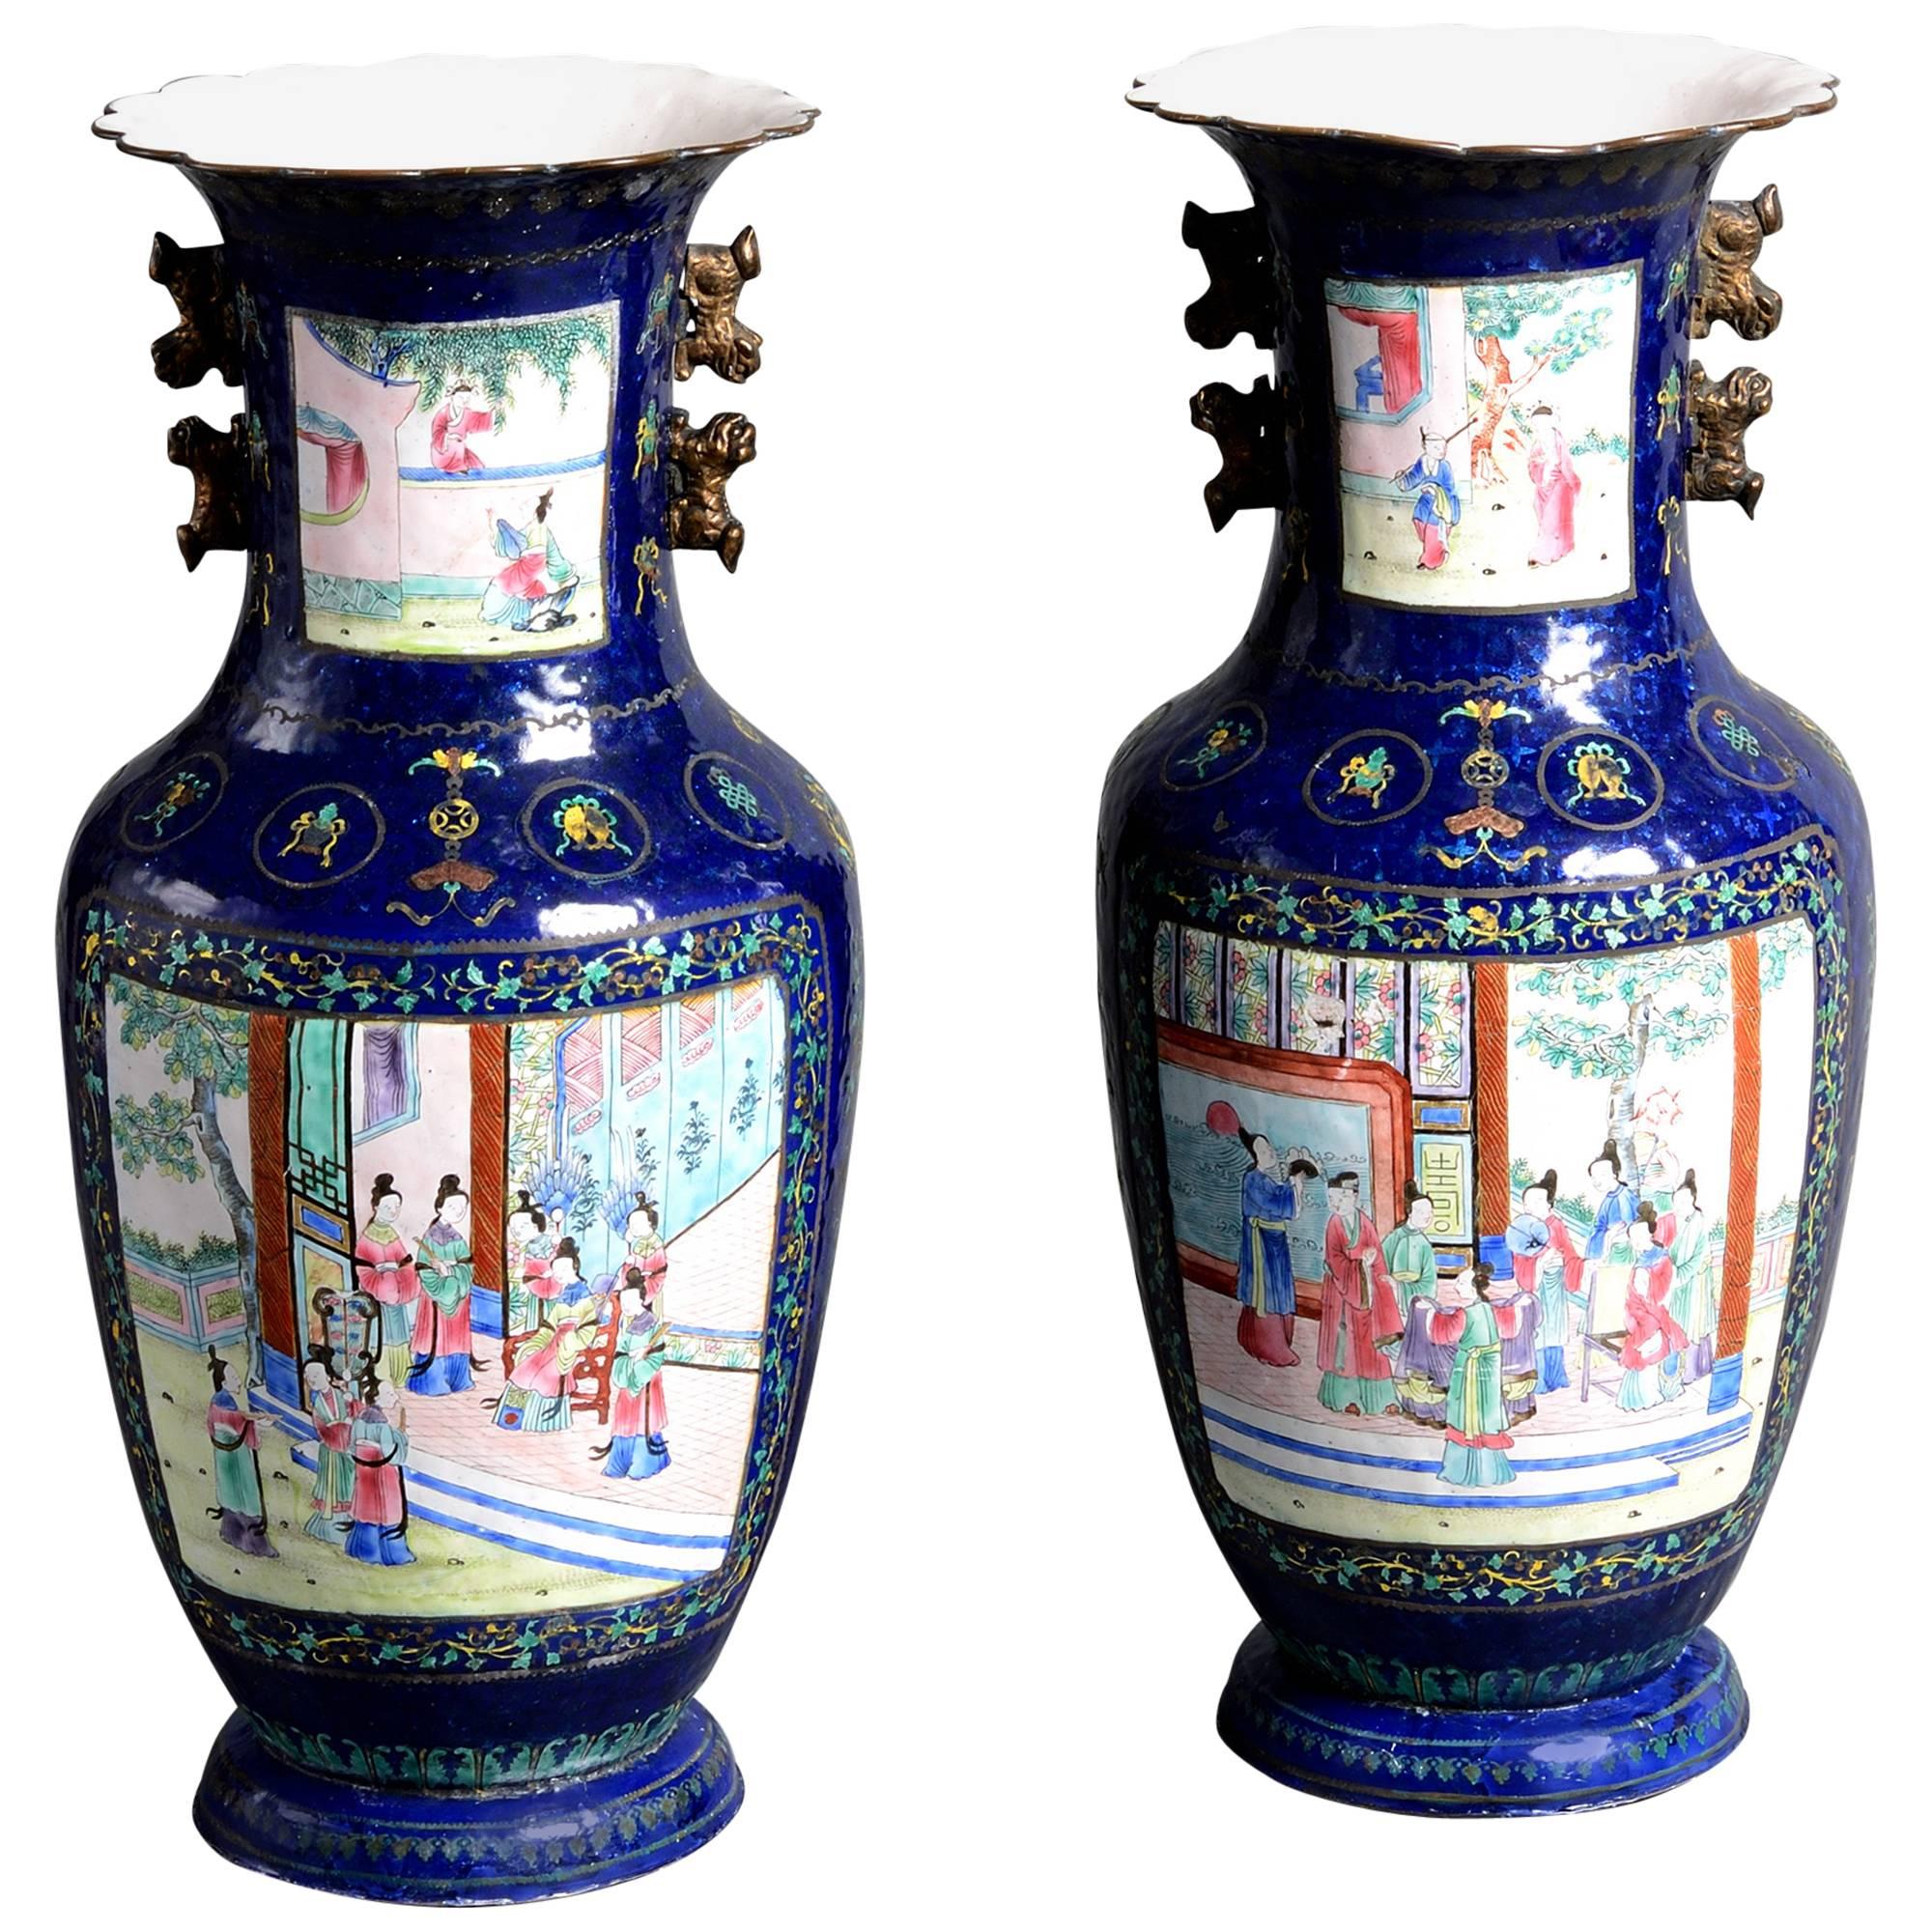 Pair of 19th Century Canton Dark Blue Enamel Vases with figurative court scenes